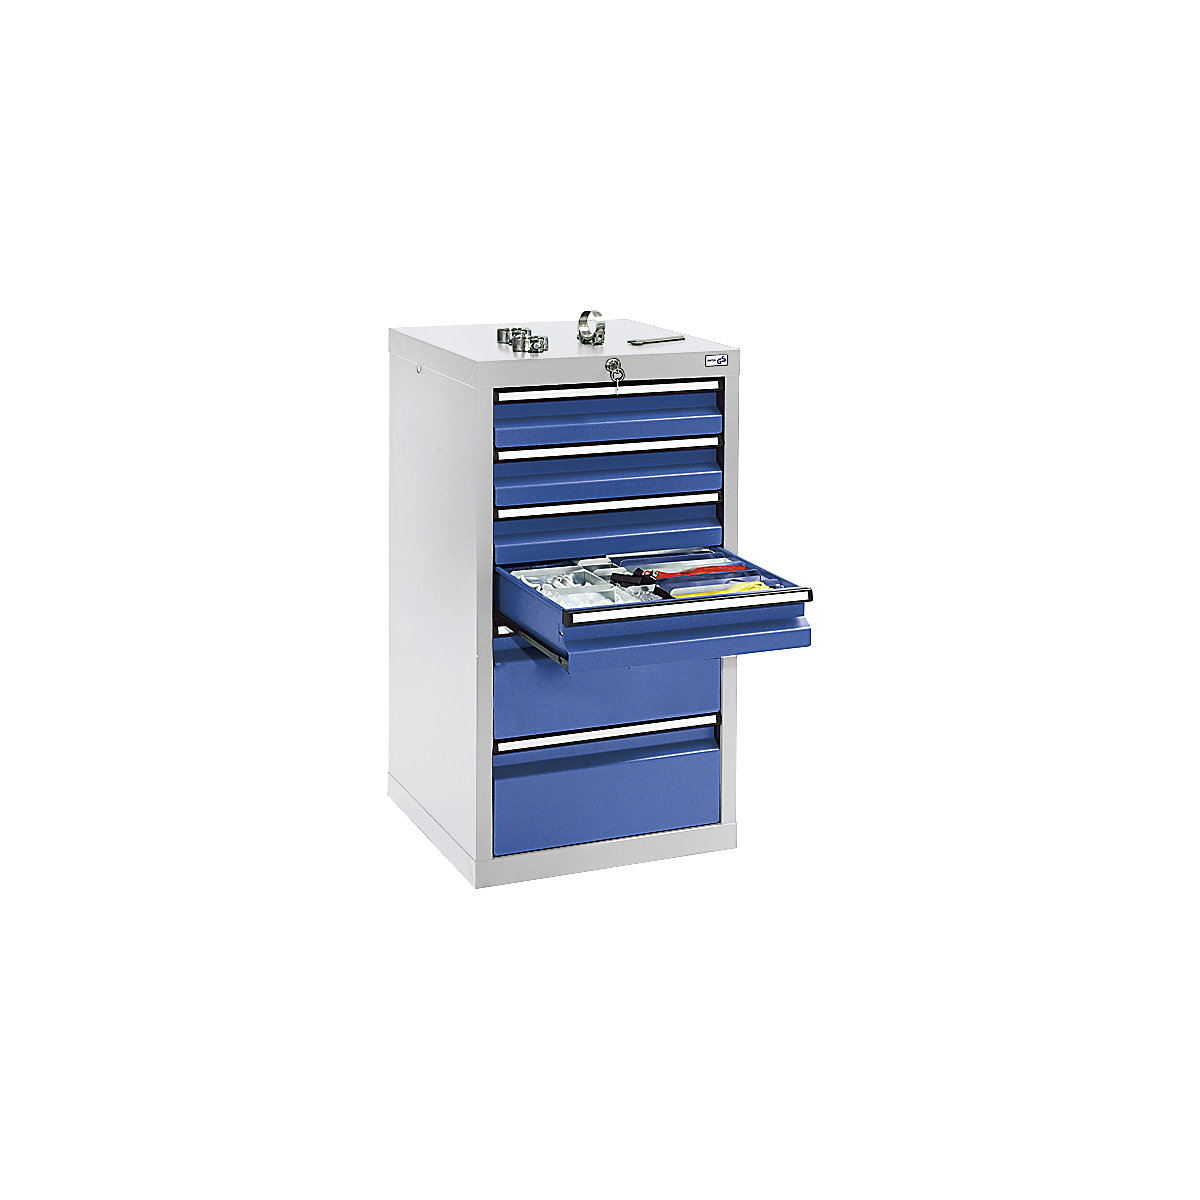 Armoire à tiroirs, h x l x p 900 x 500 x 500 mm, 4 tiroirs hauteur 100 mm, 2 hauteur 200 mm, corps gris clair, tiroirs bleu gentiane